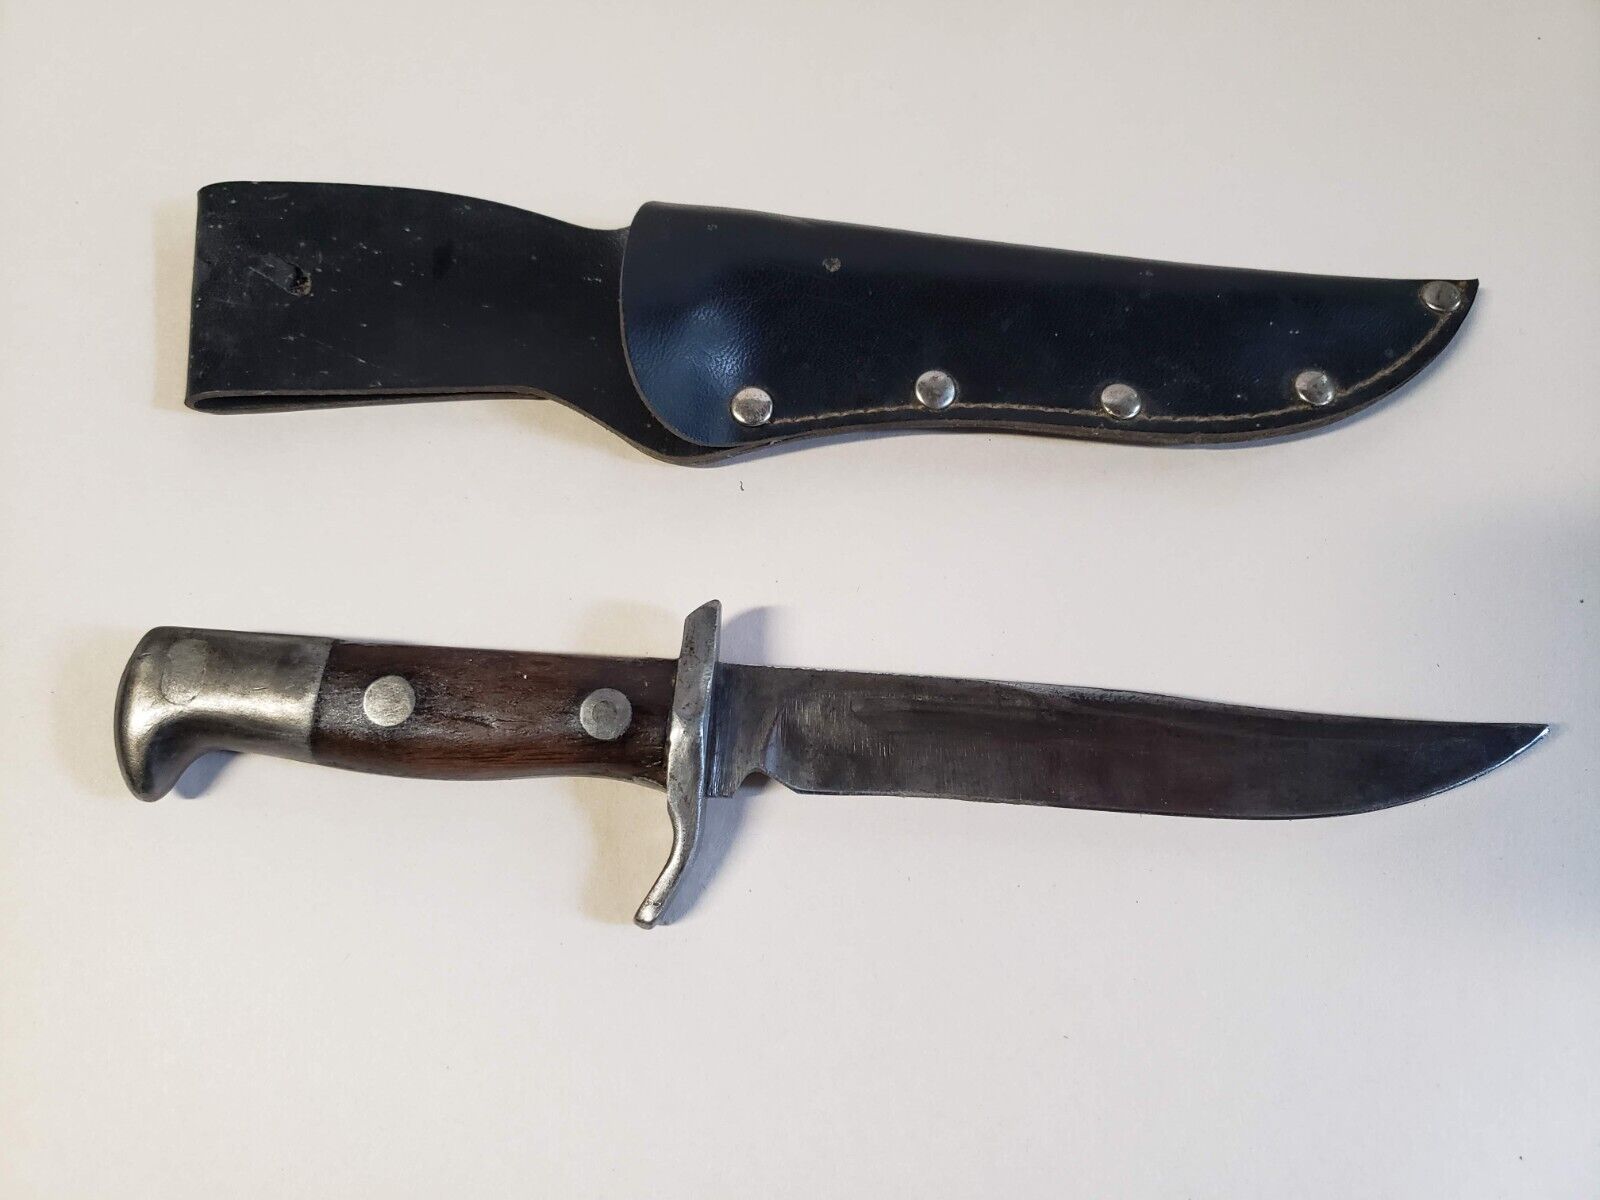 Vintage Hunting Bowie Knife - Handmade?